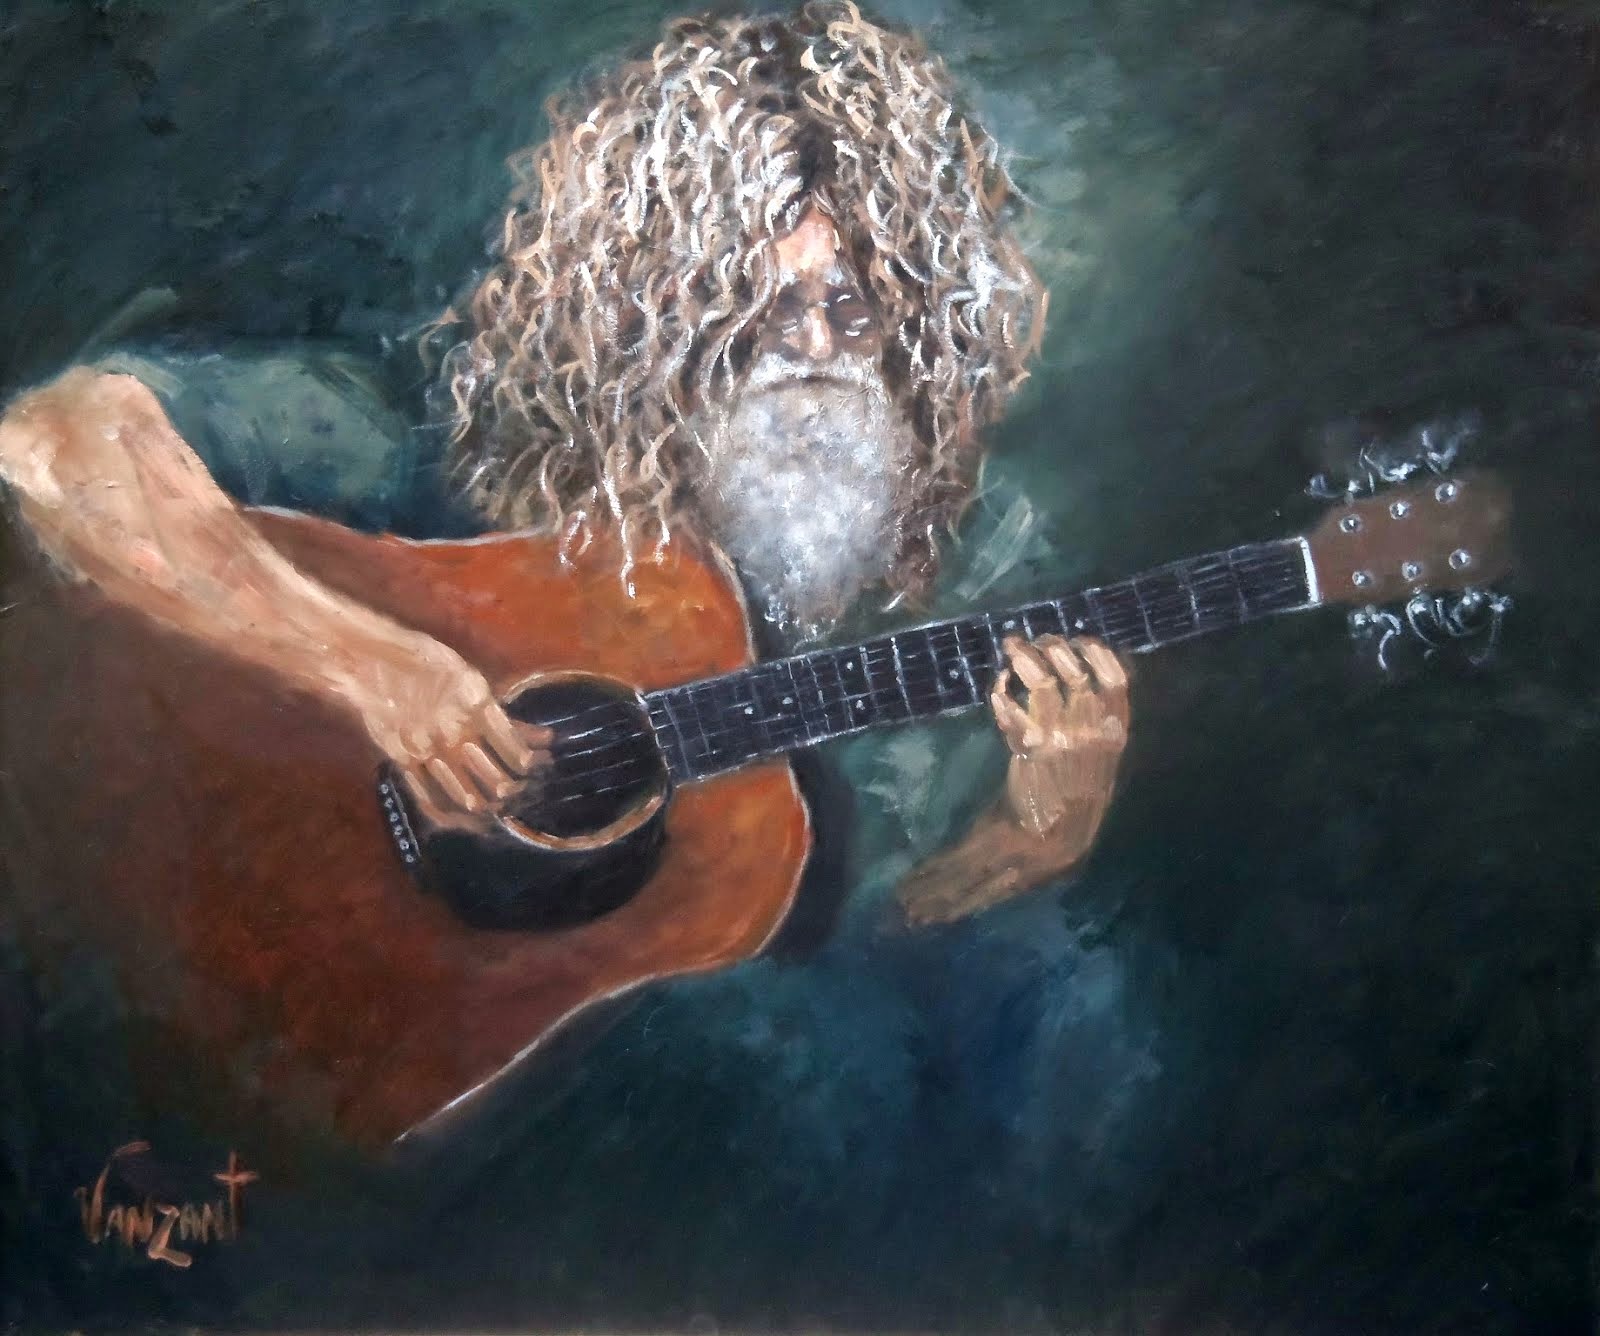 The Guitar Player - David Falcone